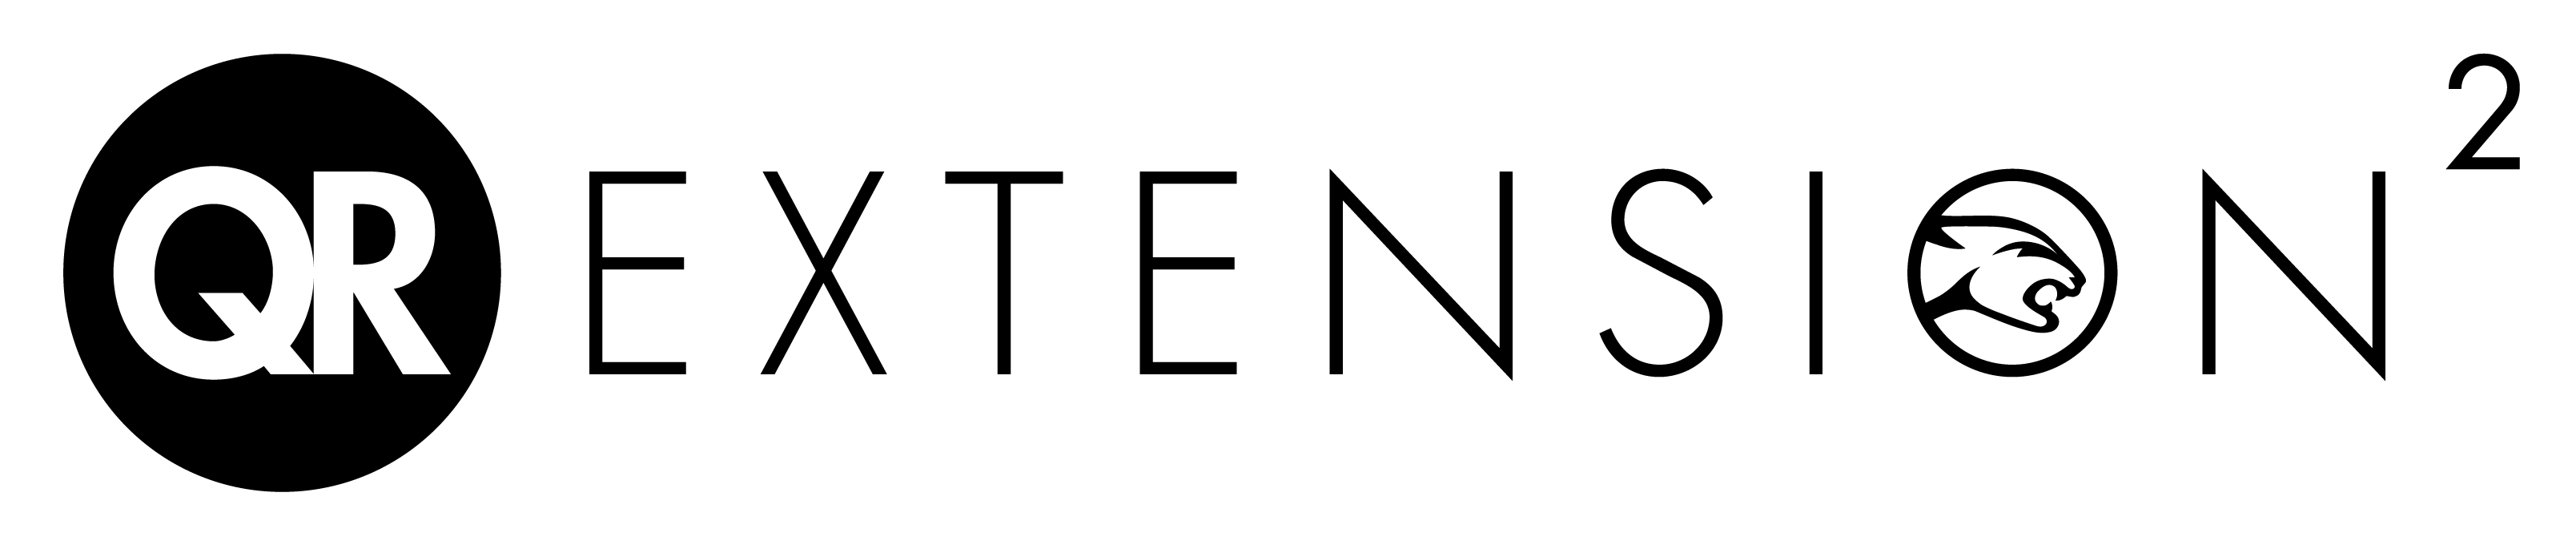 QR-Extension2-logo-01-01